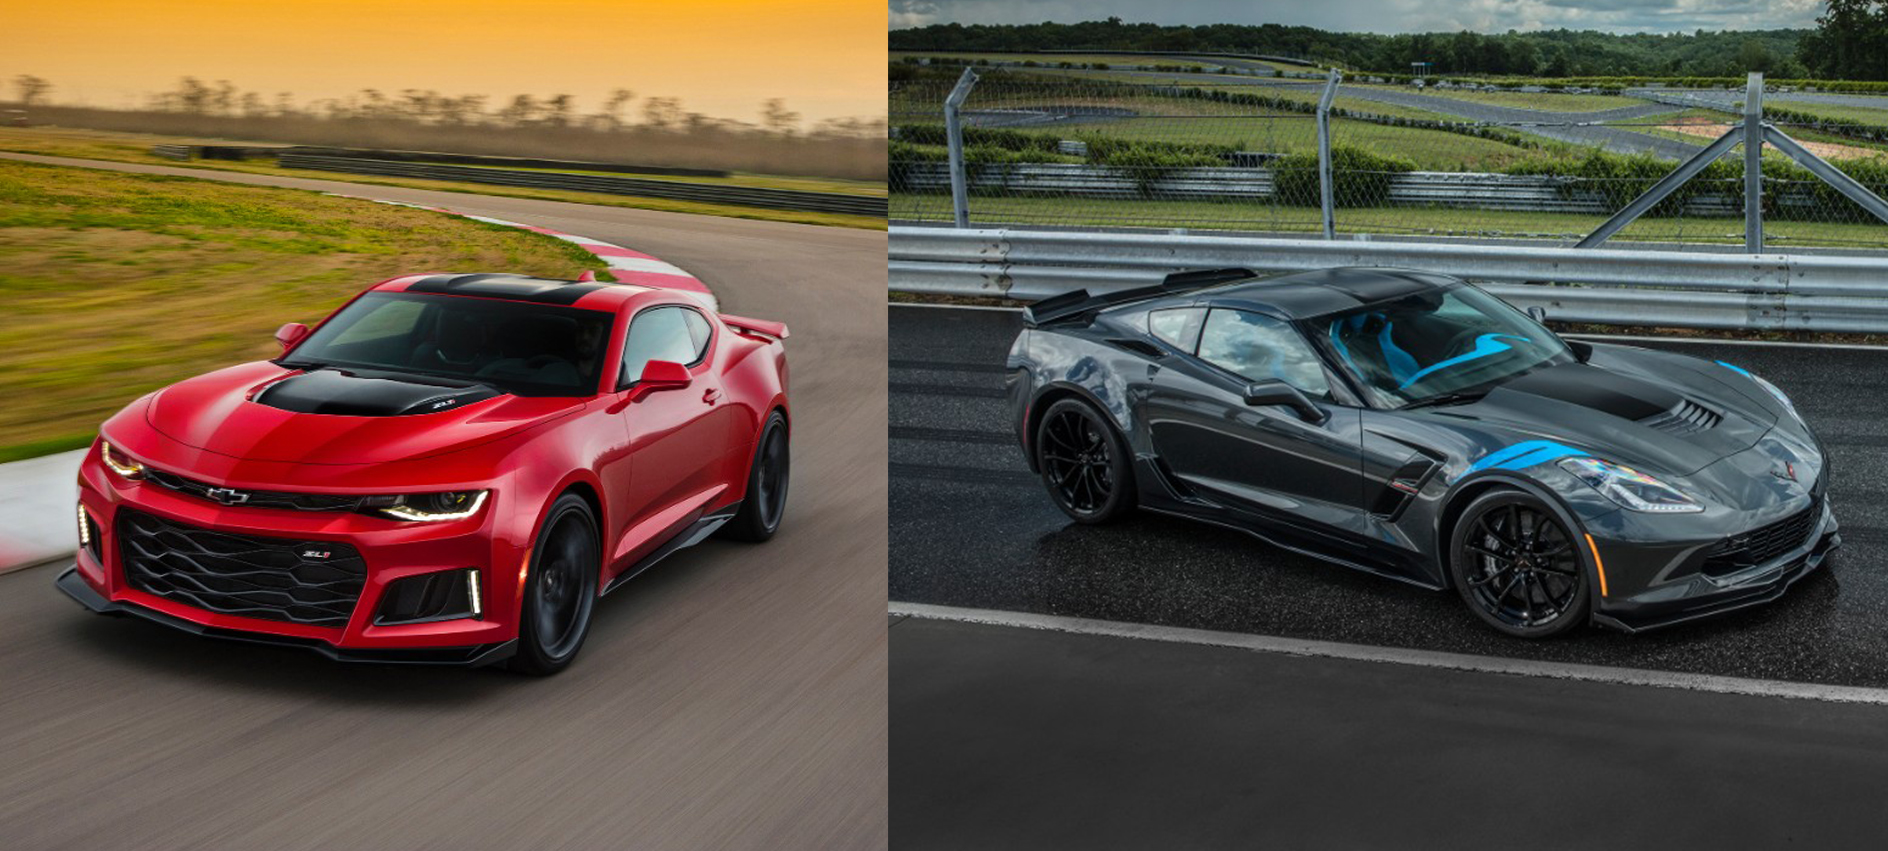 Corvette or Camaro?